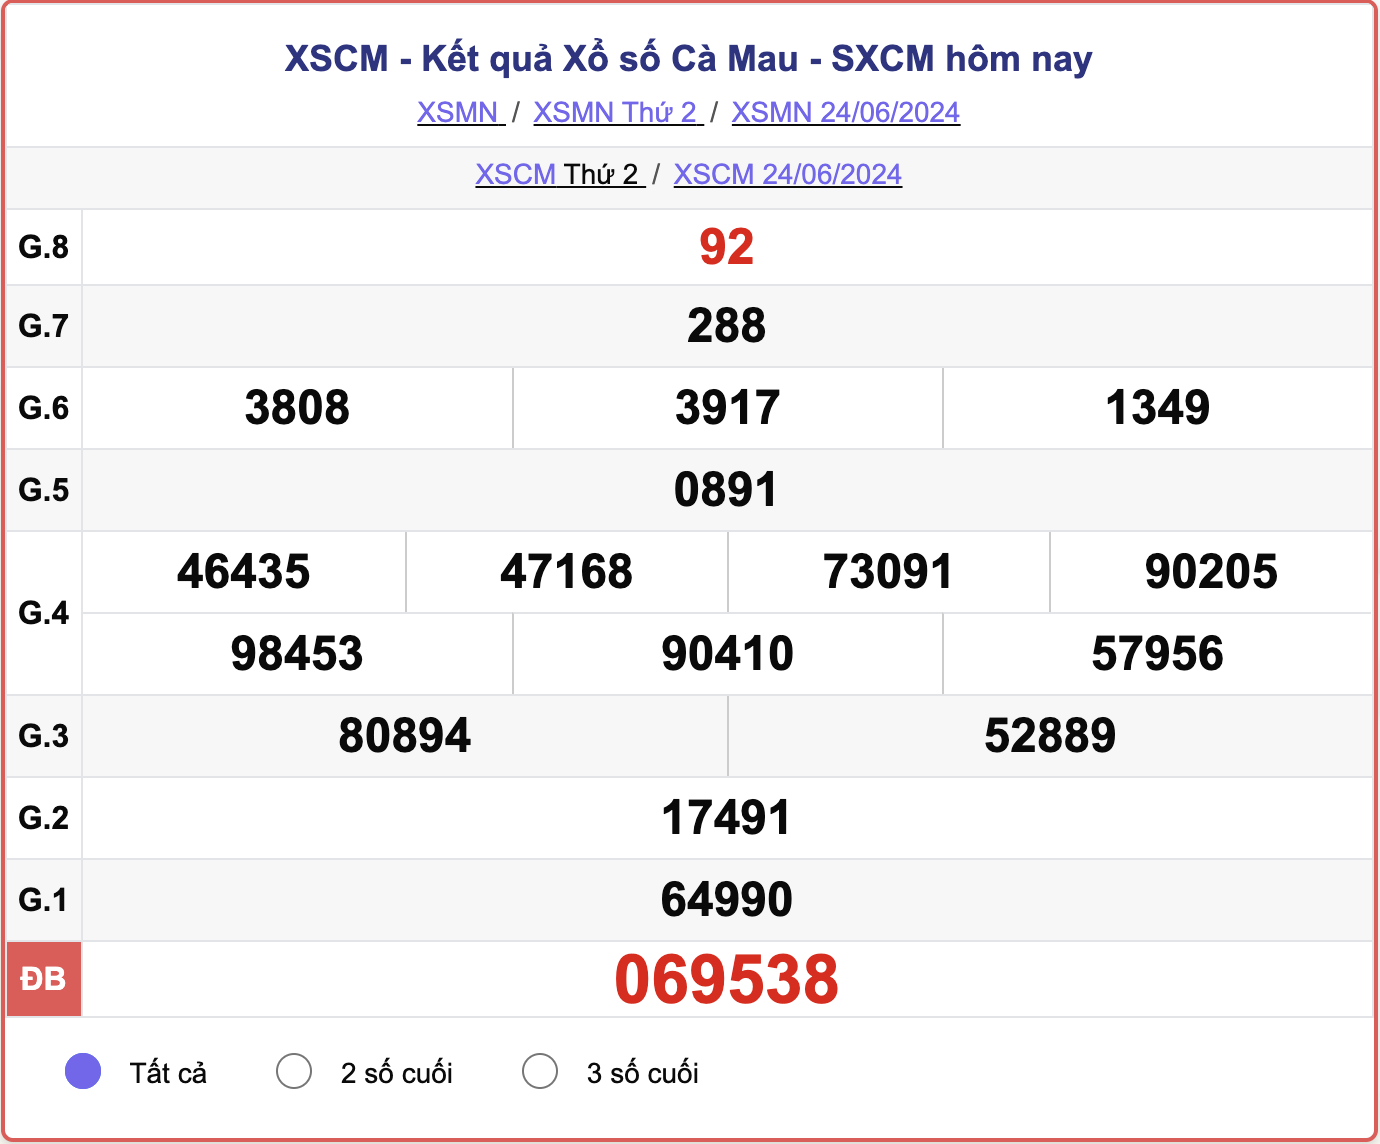 XSCM 24/6, kết quả xổ số Cà Mau hôm nay 24/6/2024.